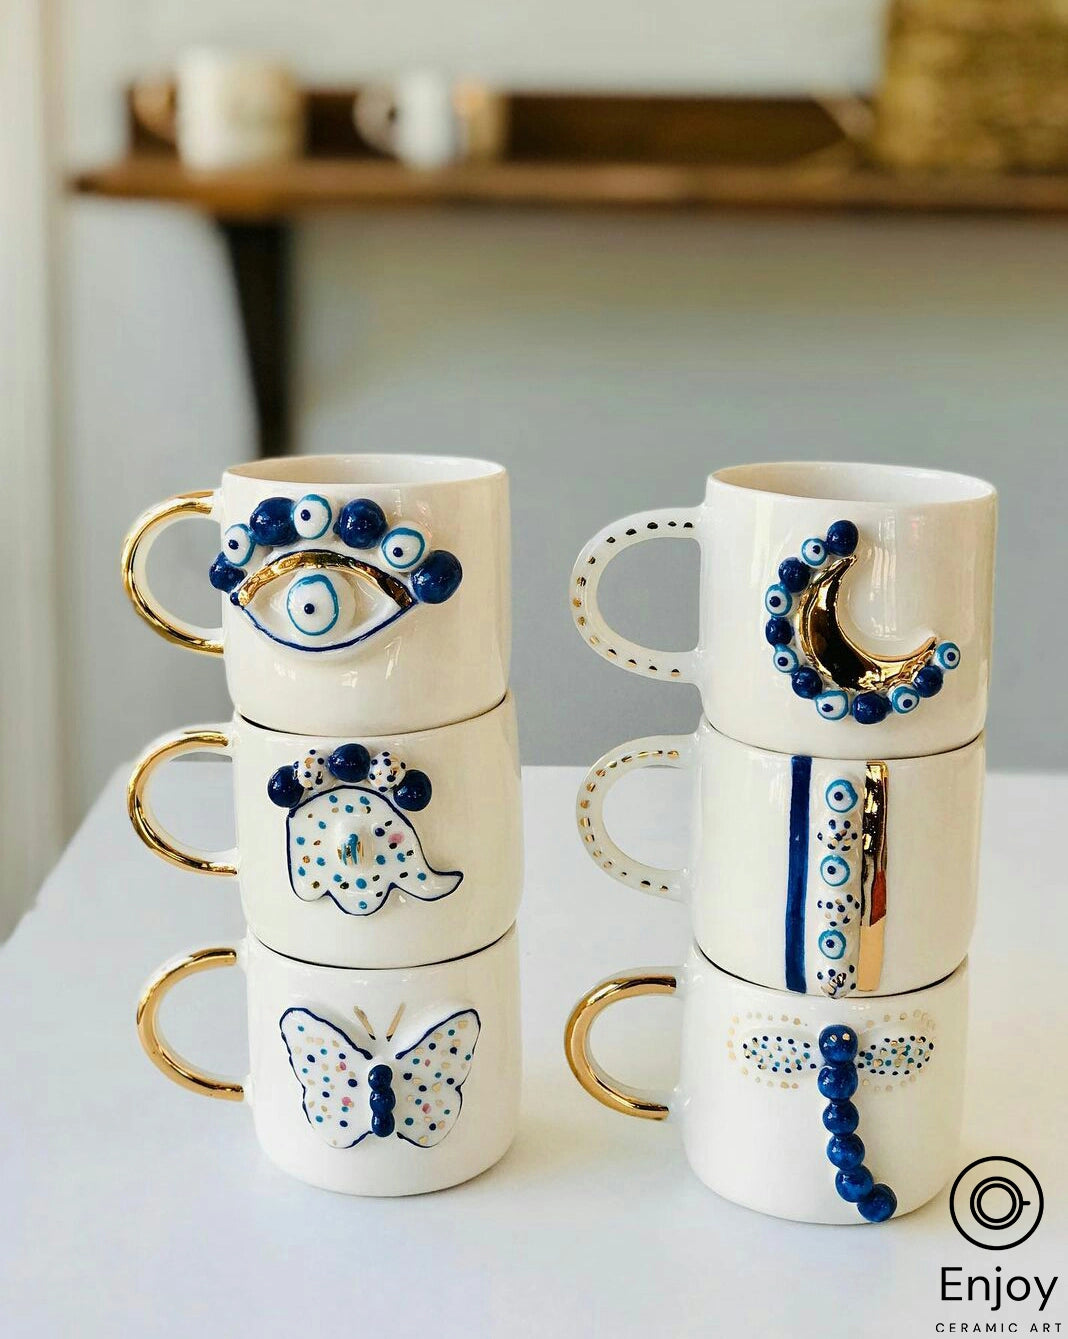 Handmade Ceramic Espresso Cup With Gold Crescent & Blue Evil Eye